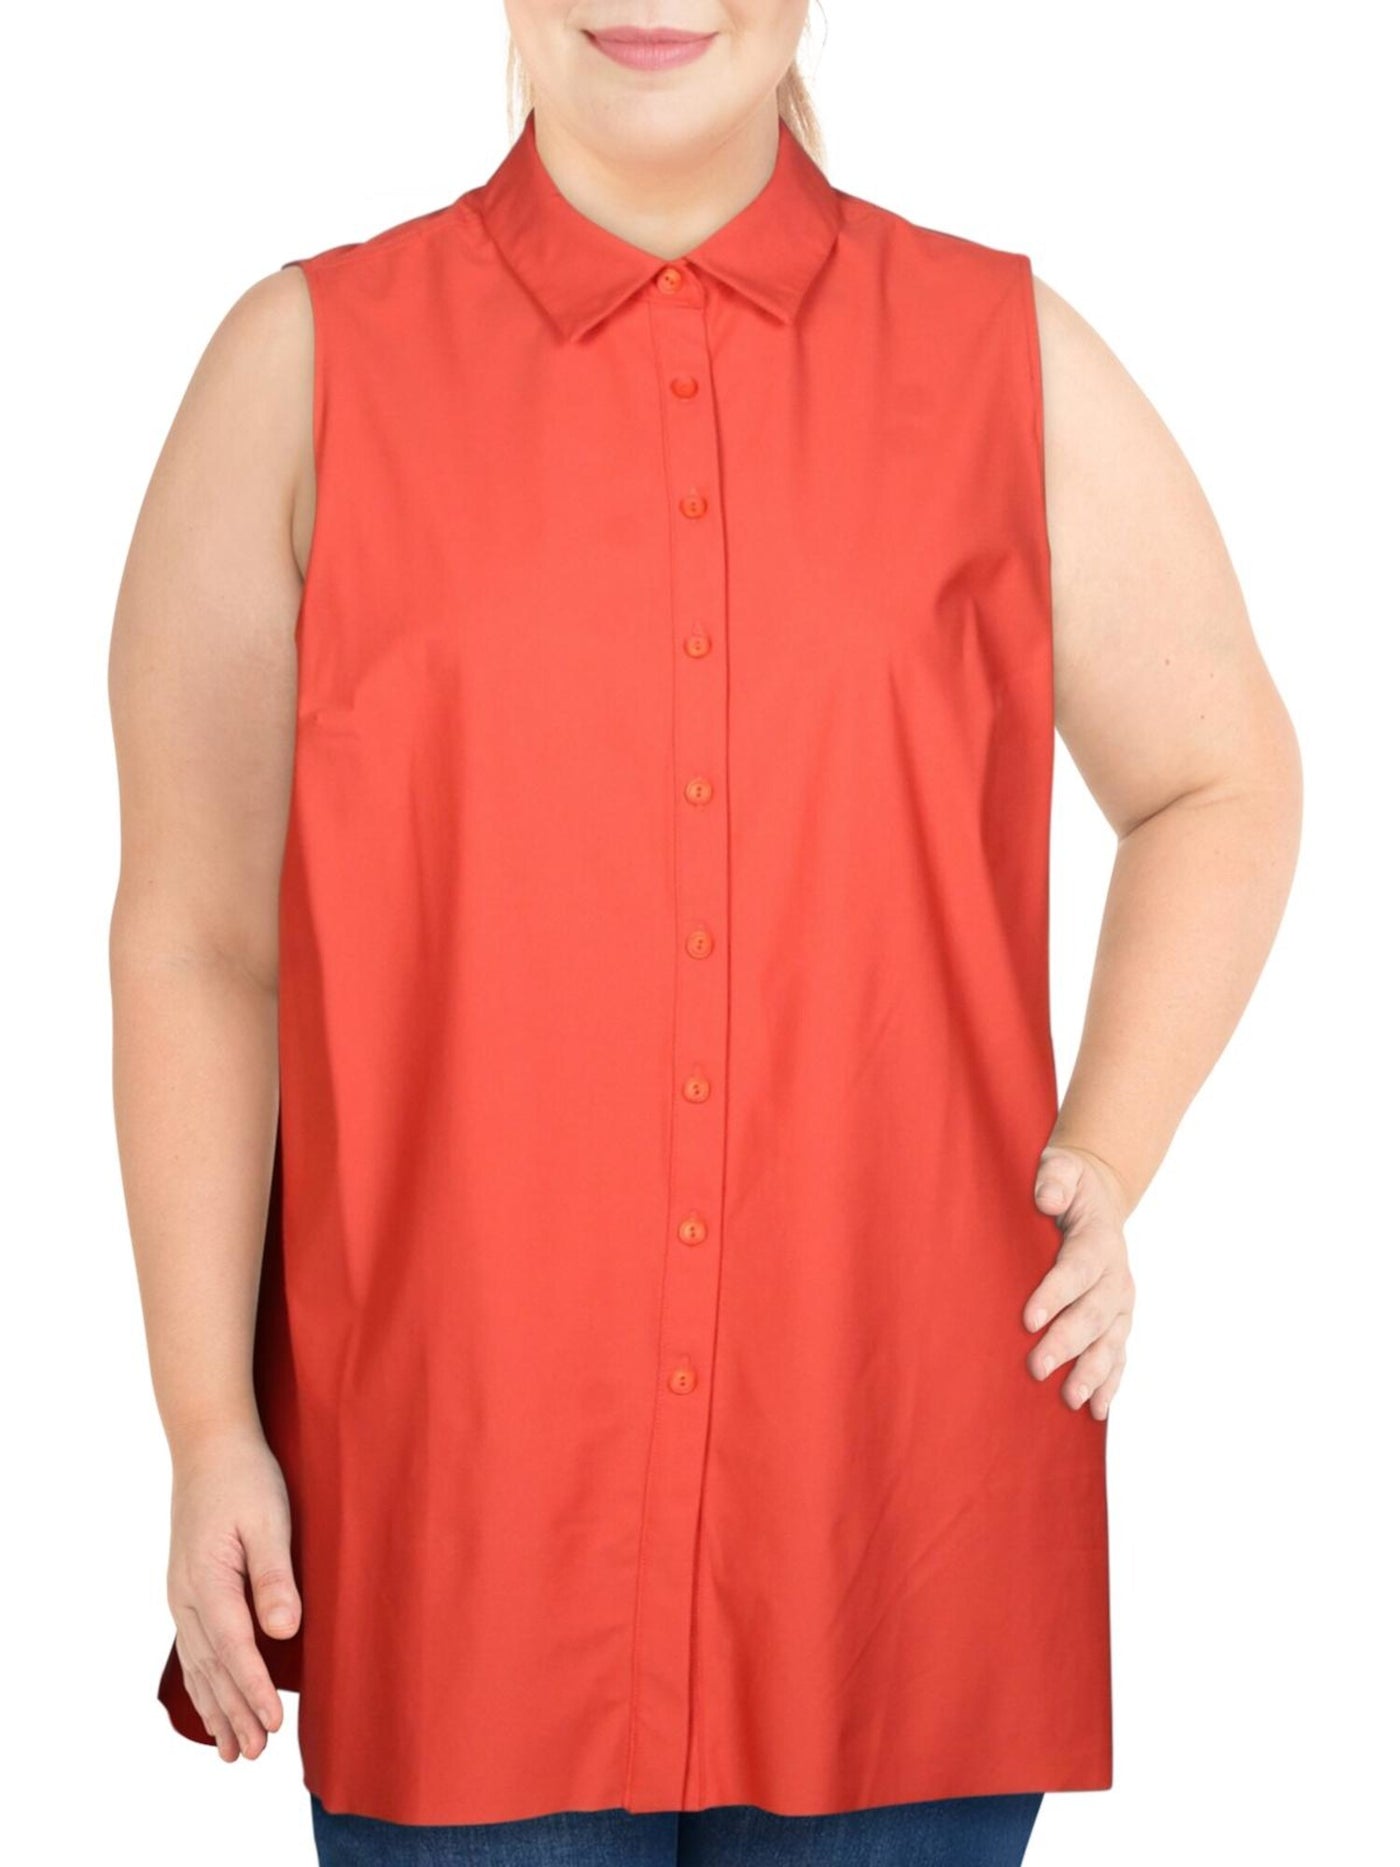 ALFANI Womens Orange Sleeveless Collared Button Up Top S